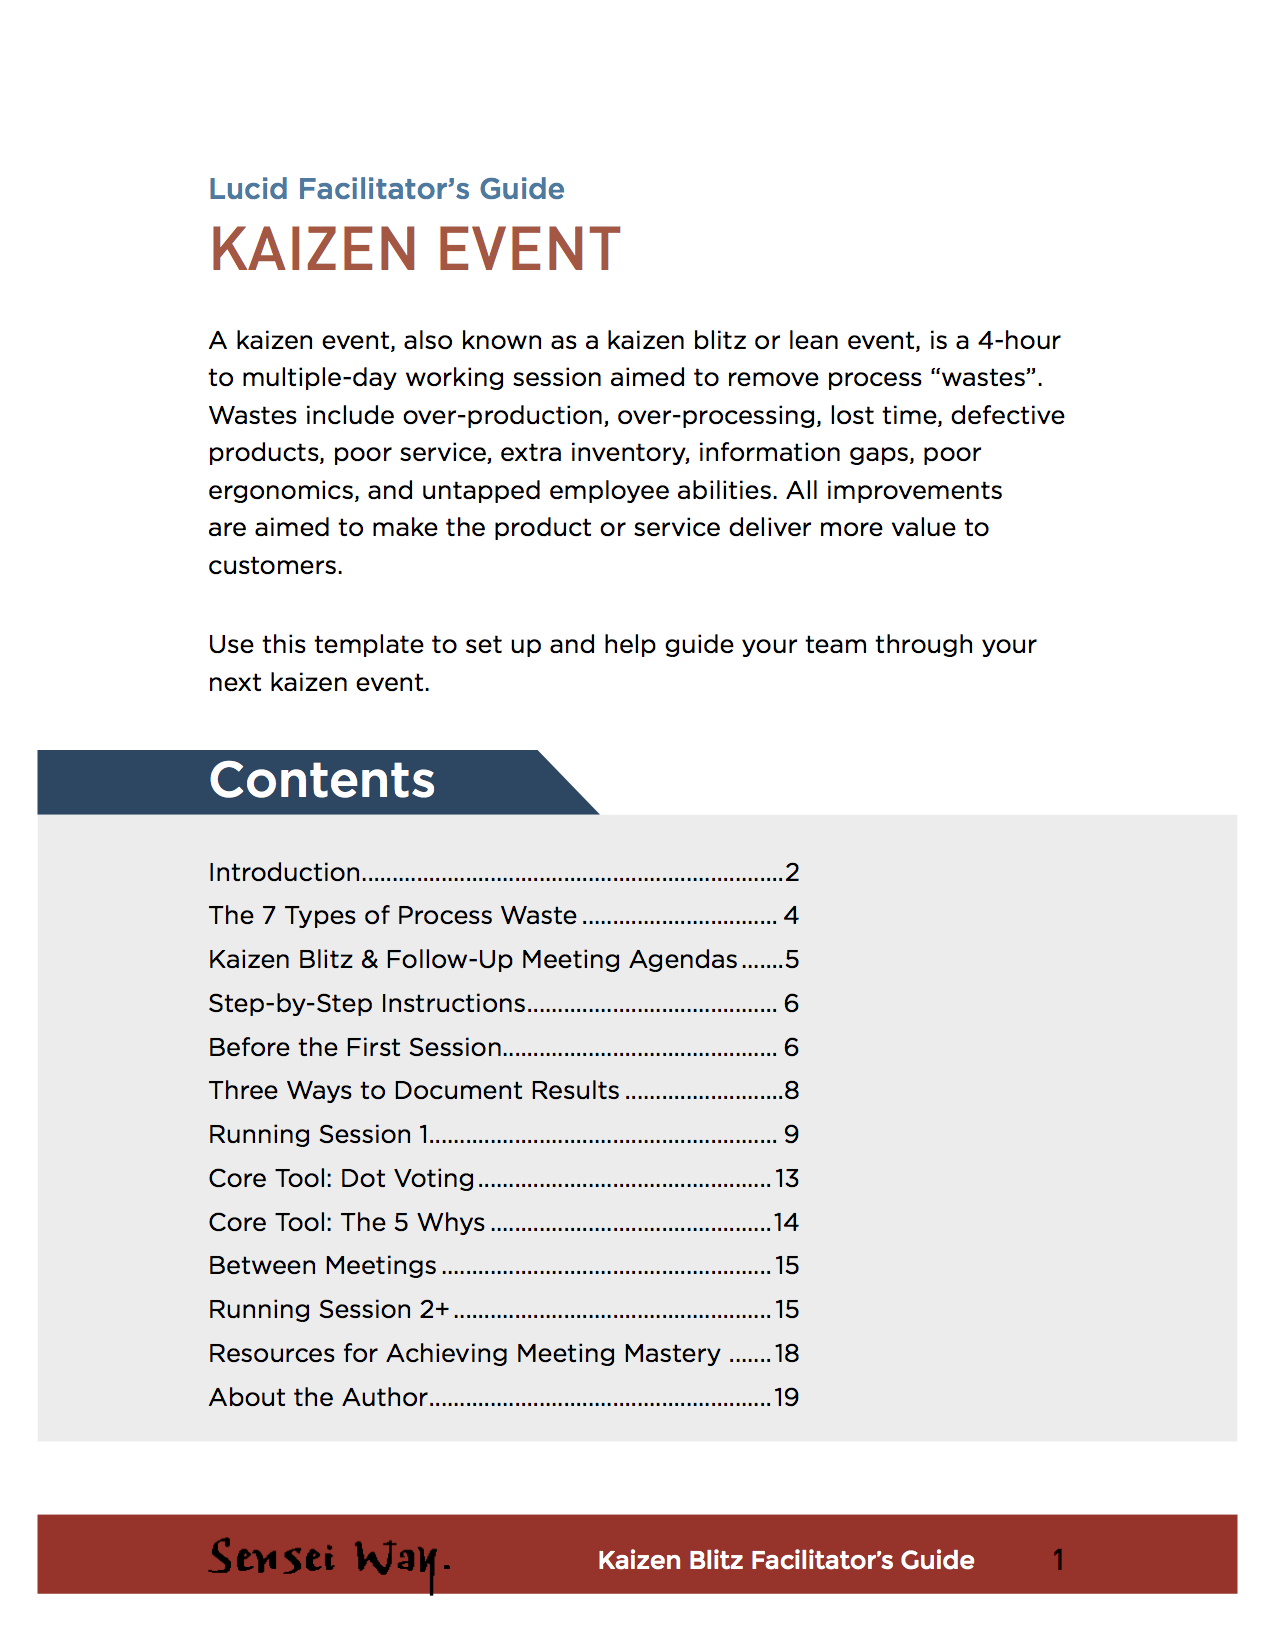 Kaizen-Event-Facilitators-Guide.png